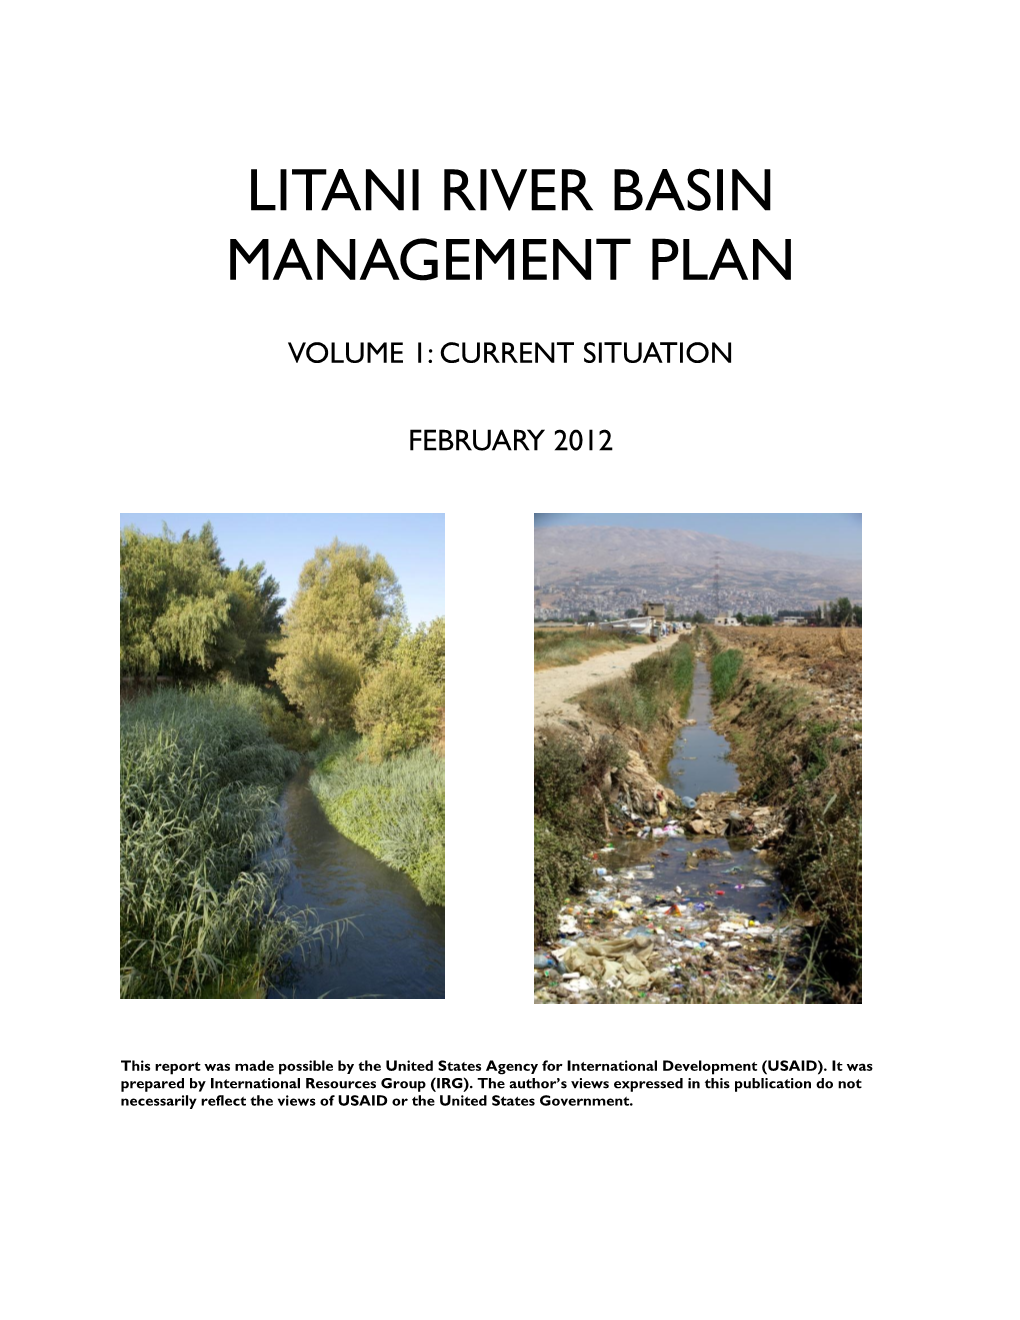 Litani River Basin Management Plan - Vol 1: Current Situation I